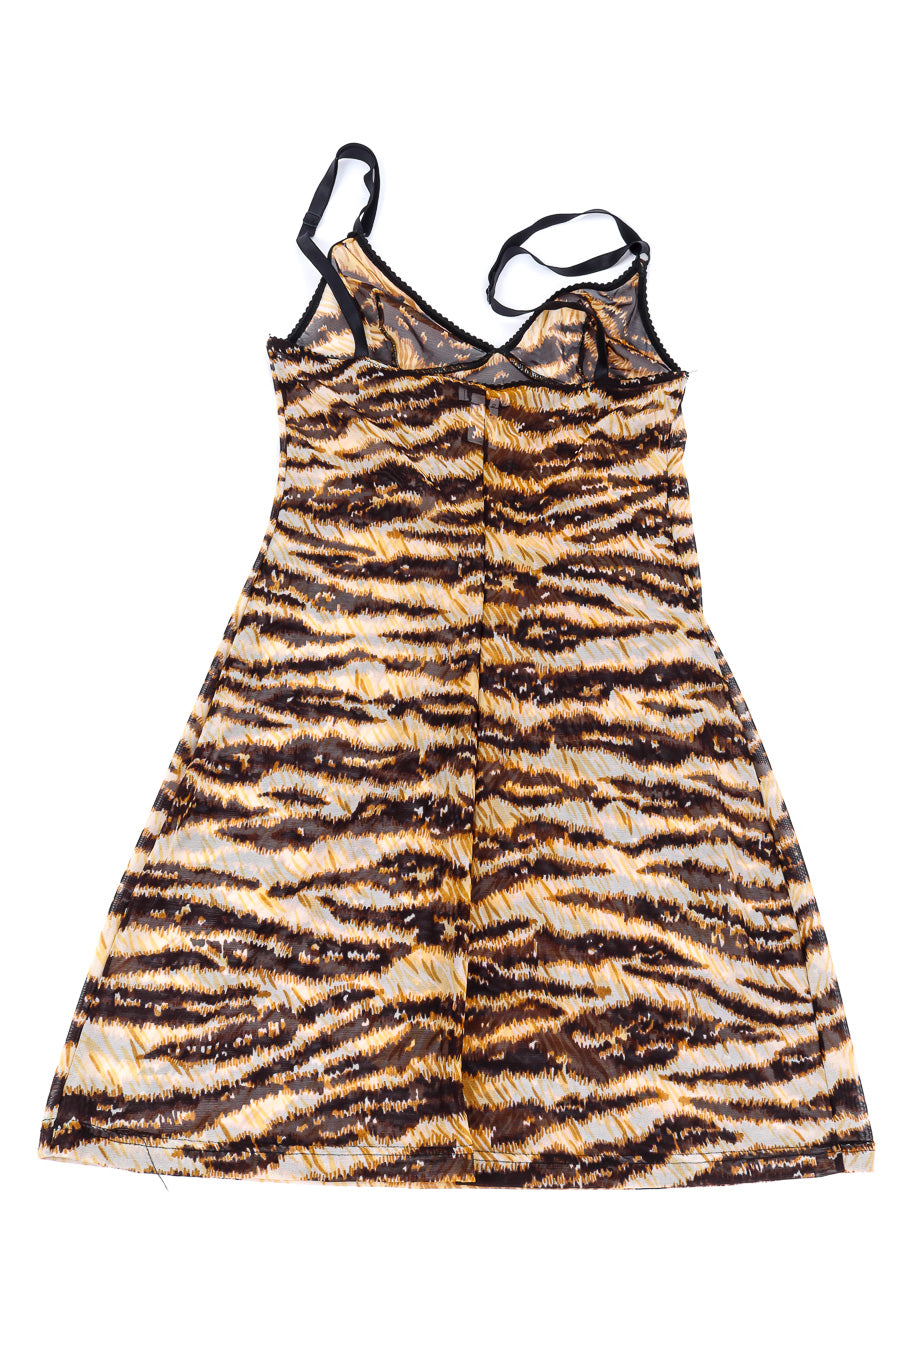 Dolce & Gabbana animal print chemise back flat-lay @recessla